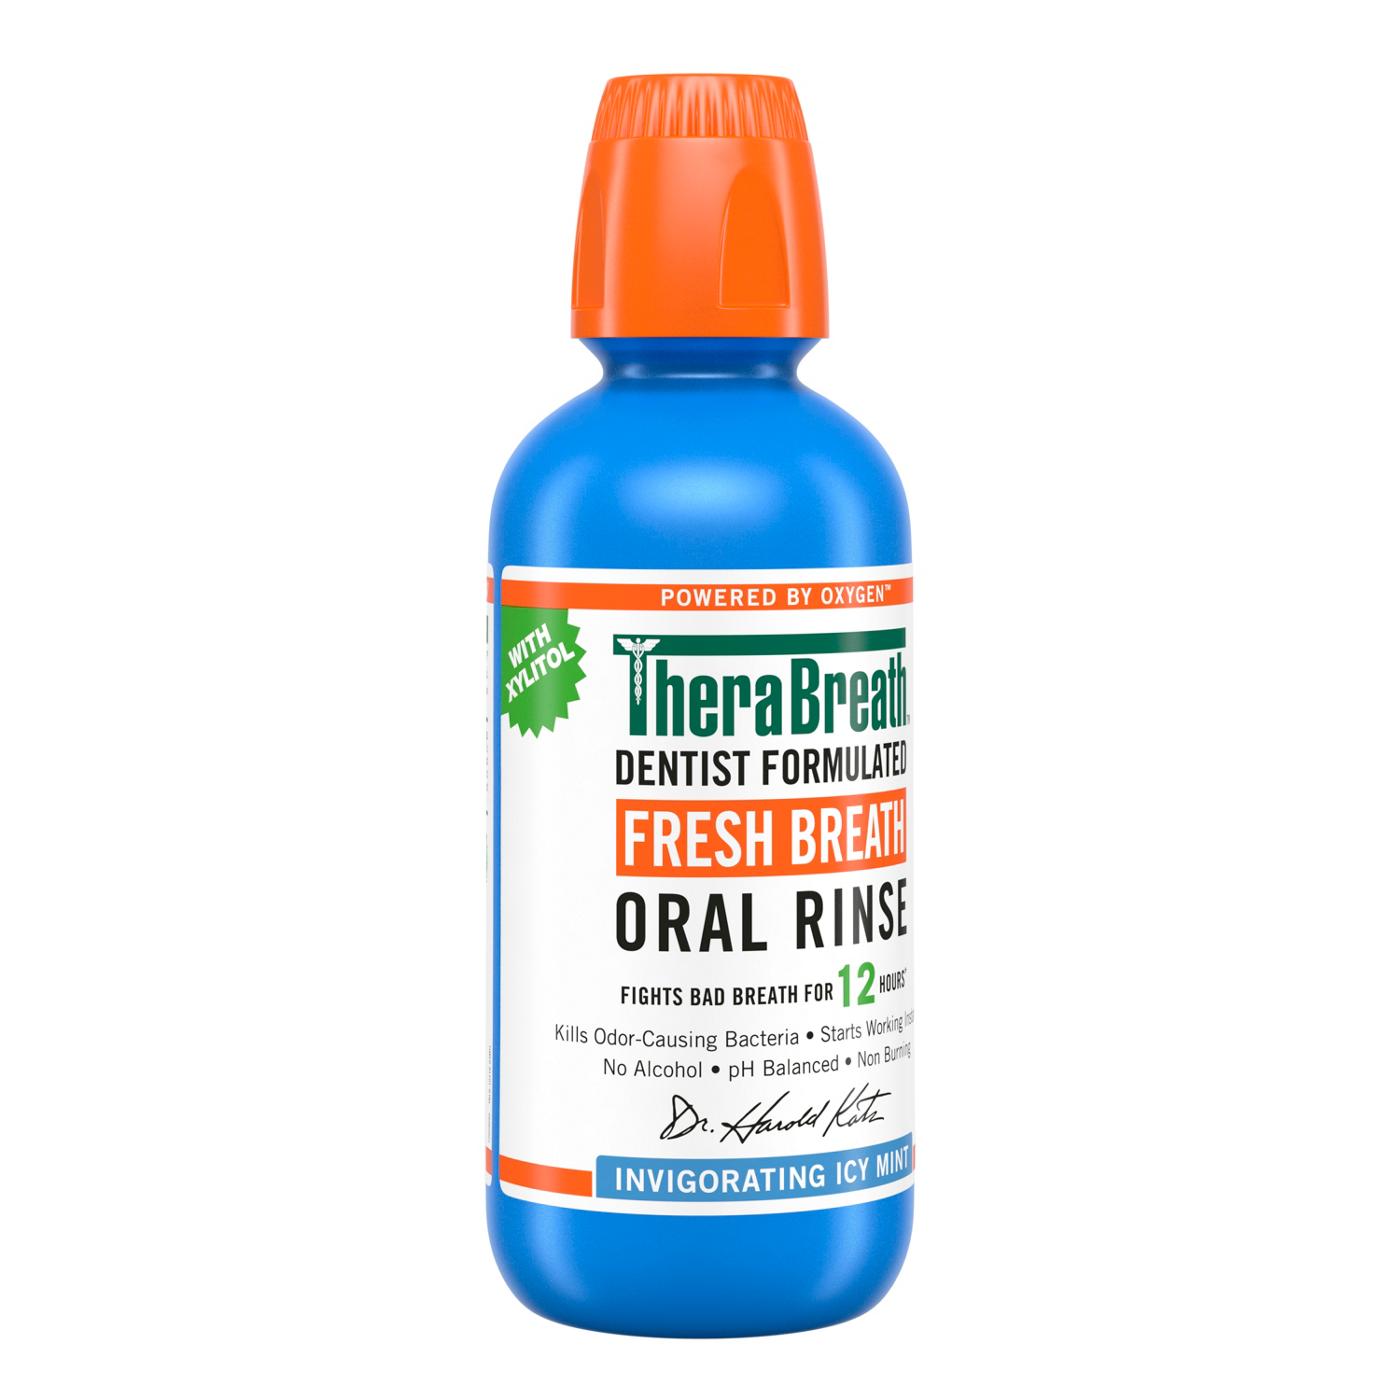 TheraBreath Fresh Breath Oral Rinse - Icy Mint; image 3 of 6